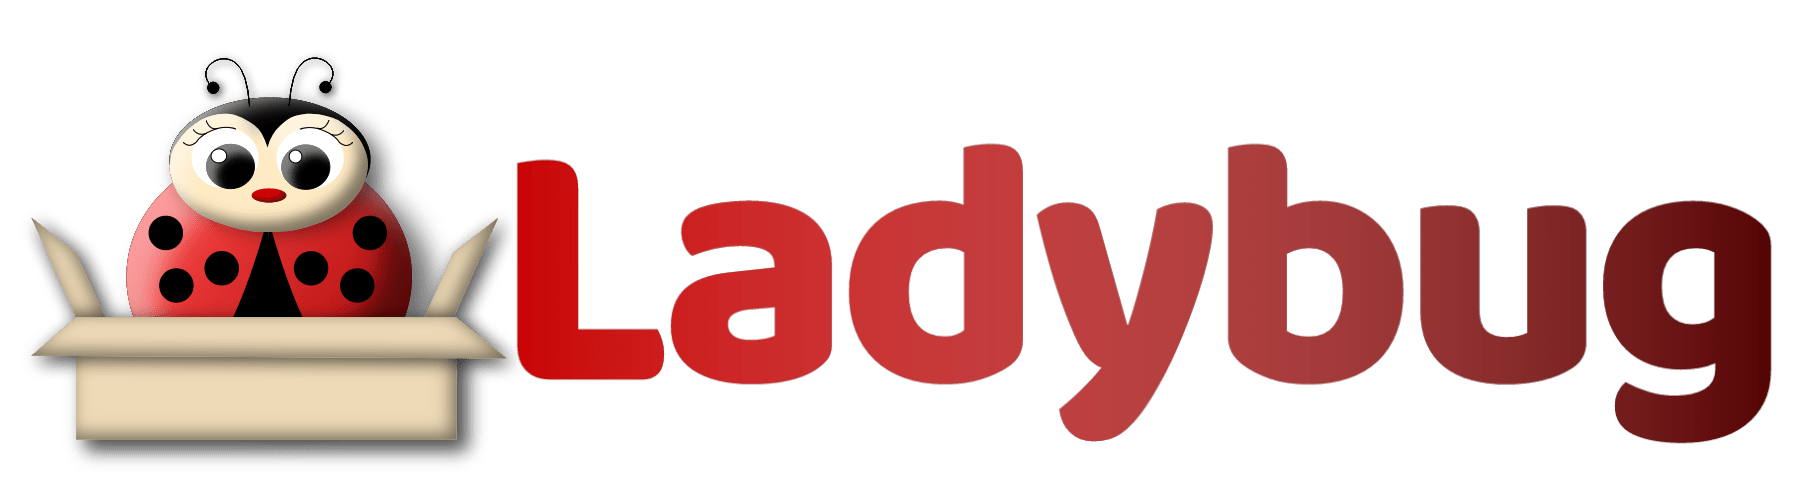 Ladybug Online Store